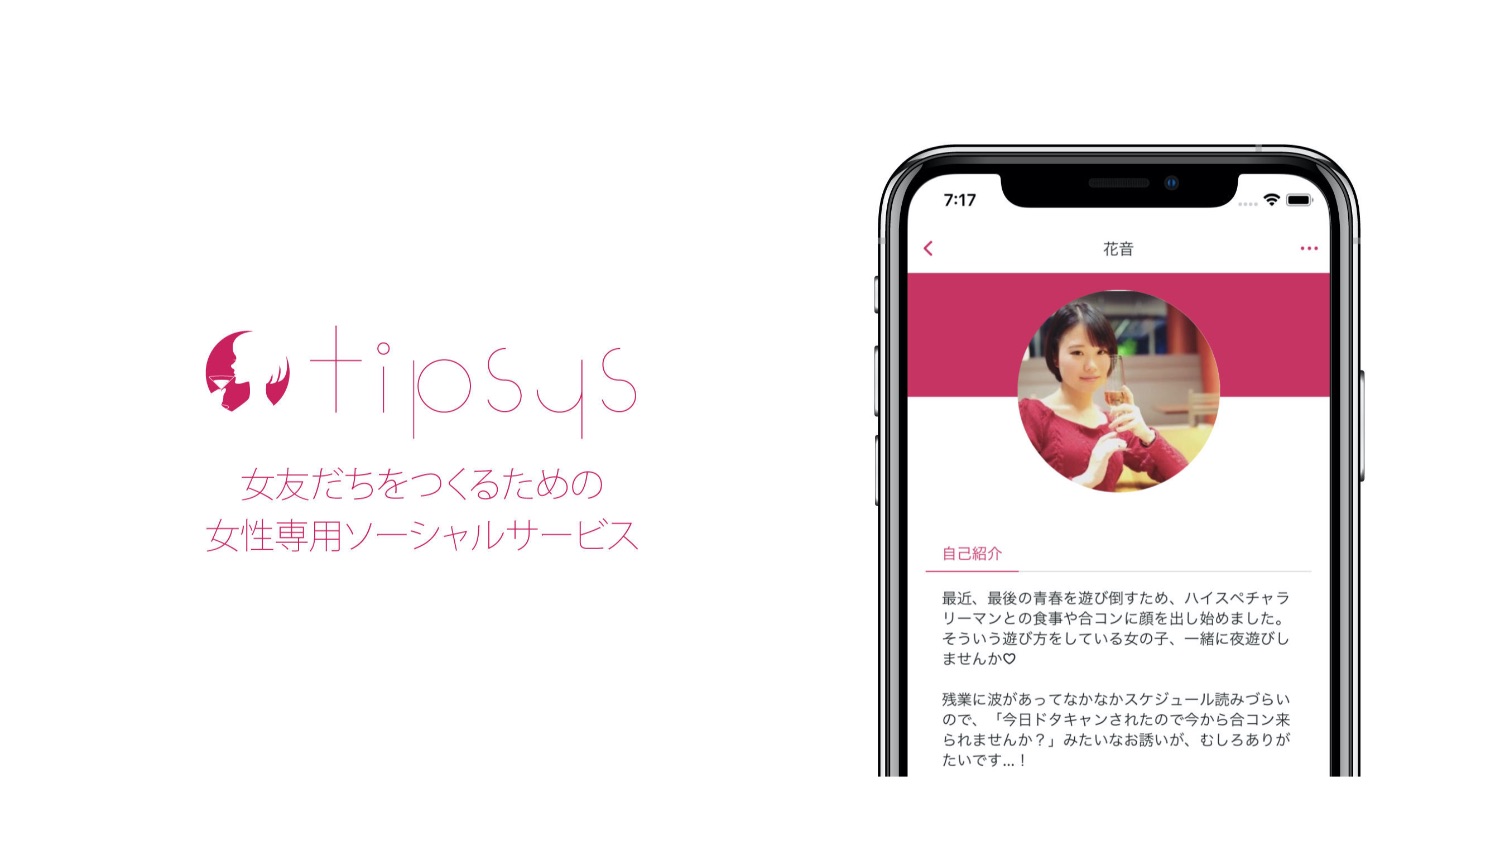 LINE the otakus messaging app